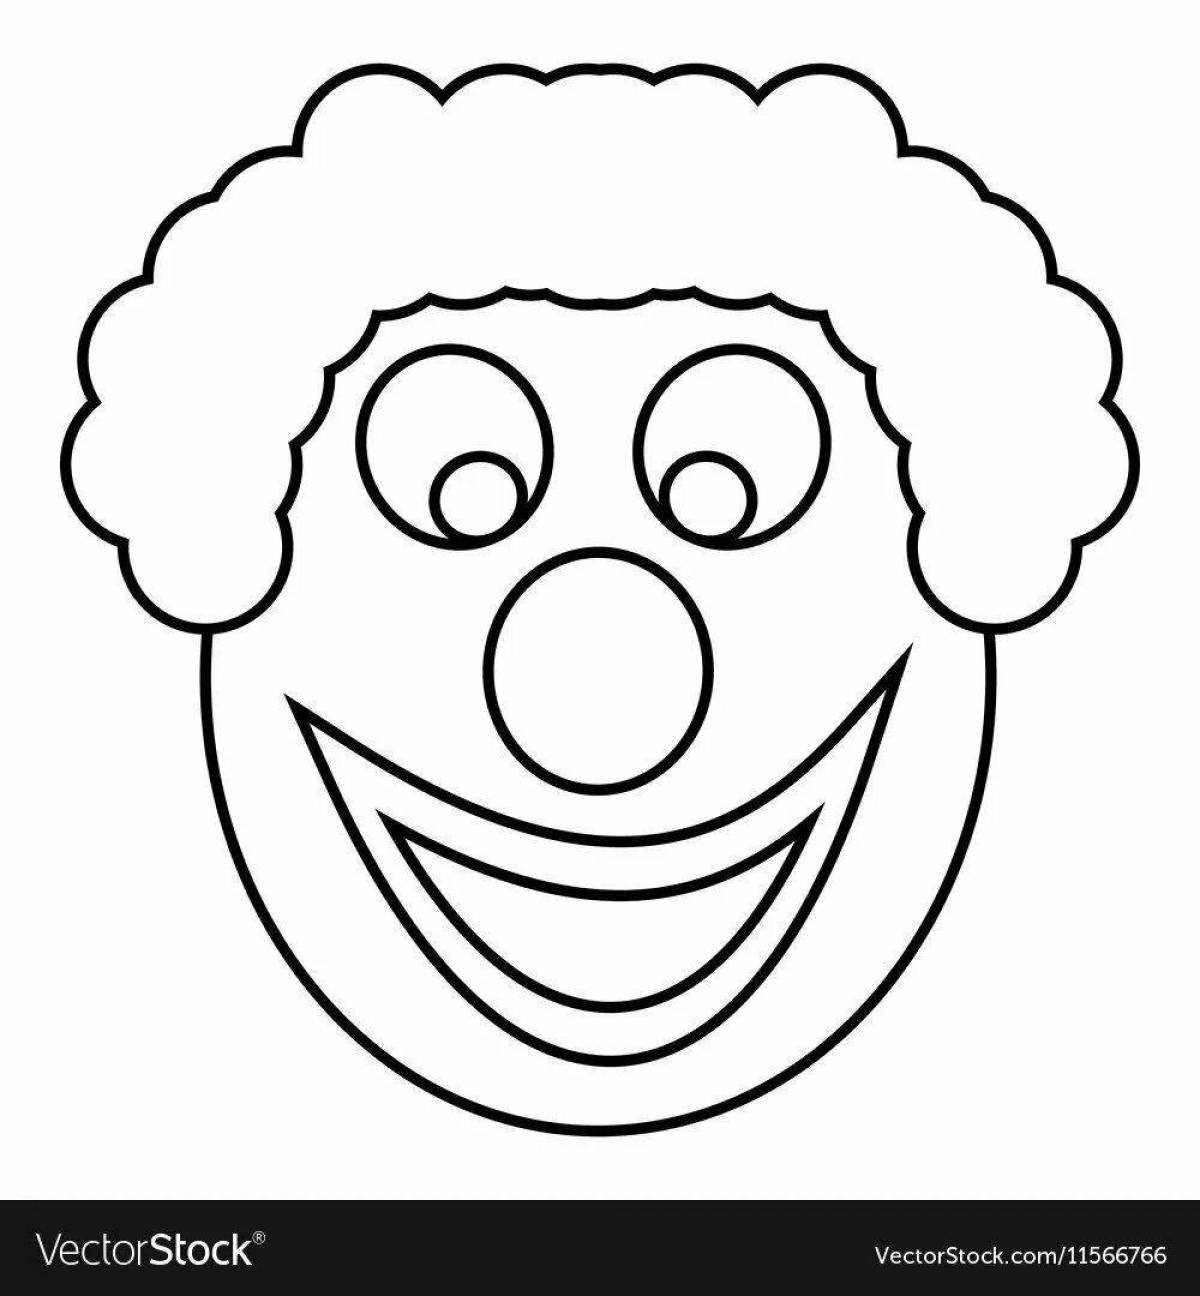 Шаблон рот клоуна. Голова клоуна раскраска. Лицо клоуна для аппликации. Аппликация "клоун". Клоун раскраска для детей.